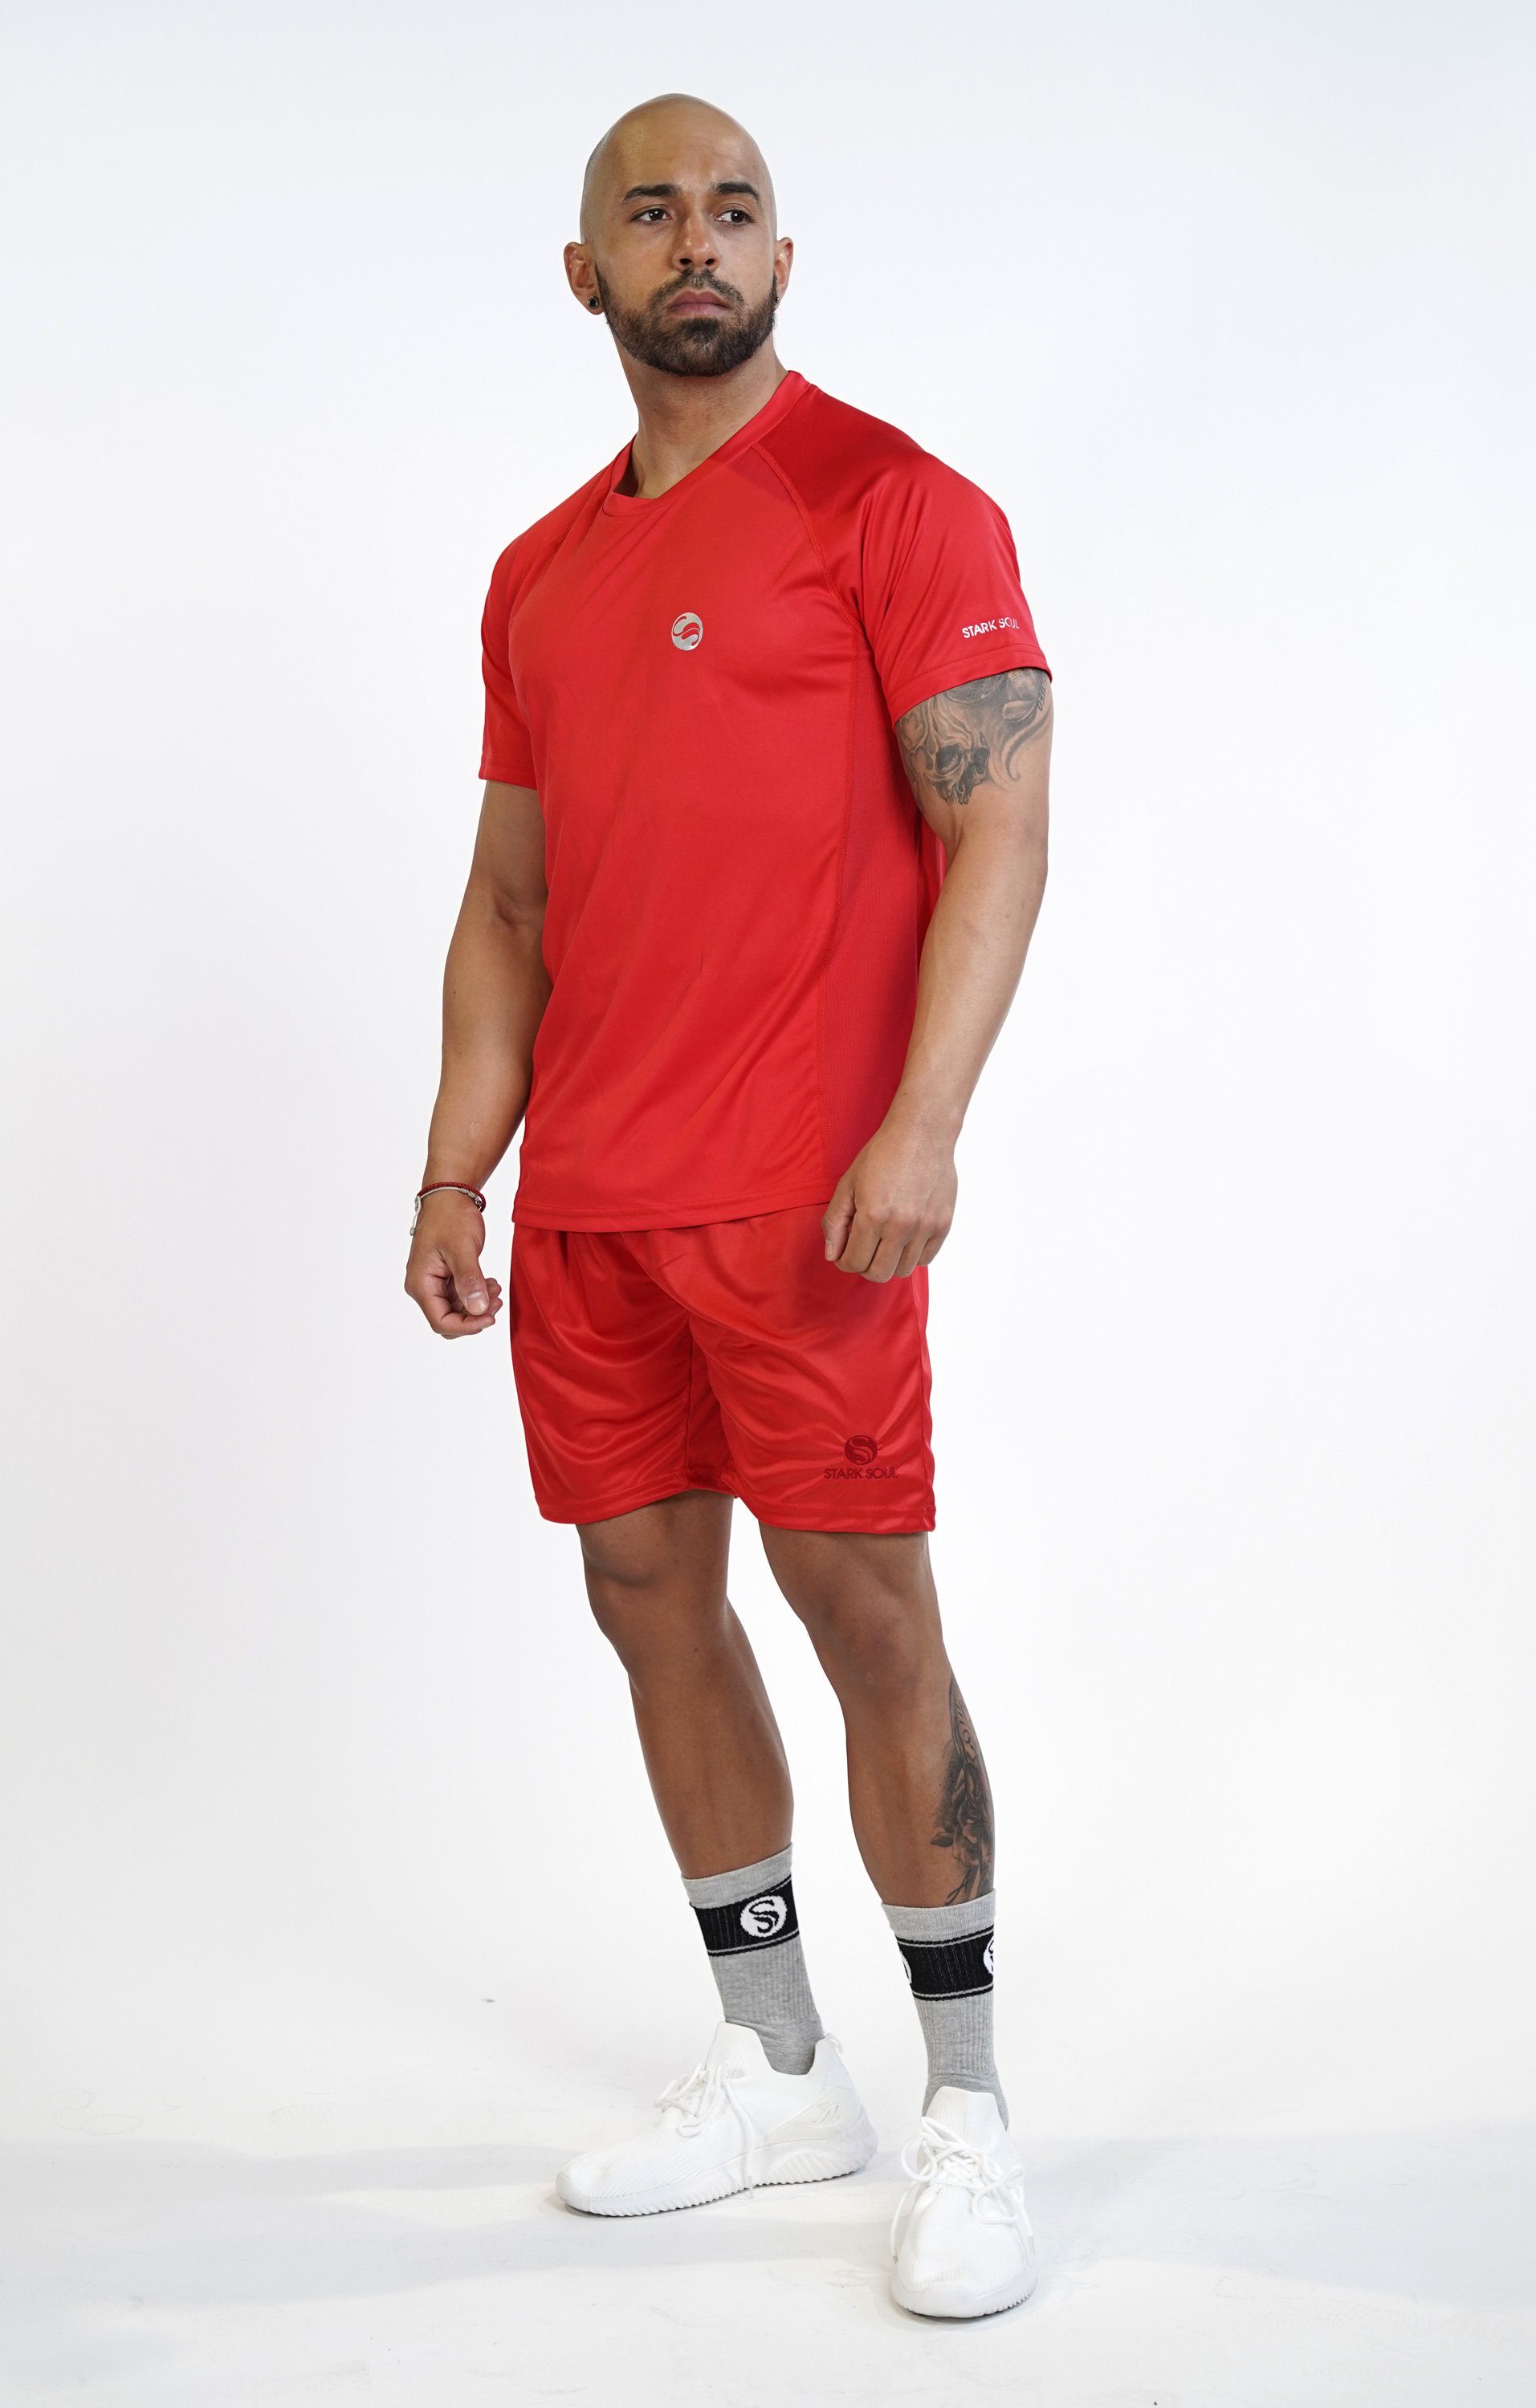 Sportshirt, "Reflect", Funktionsshirt Kurzarm seitlichen Funktionsshirt Soul® Rot mit Mesh-Einsätzen T-Shirt Fitness Stark